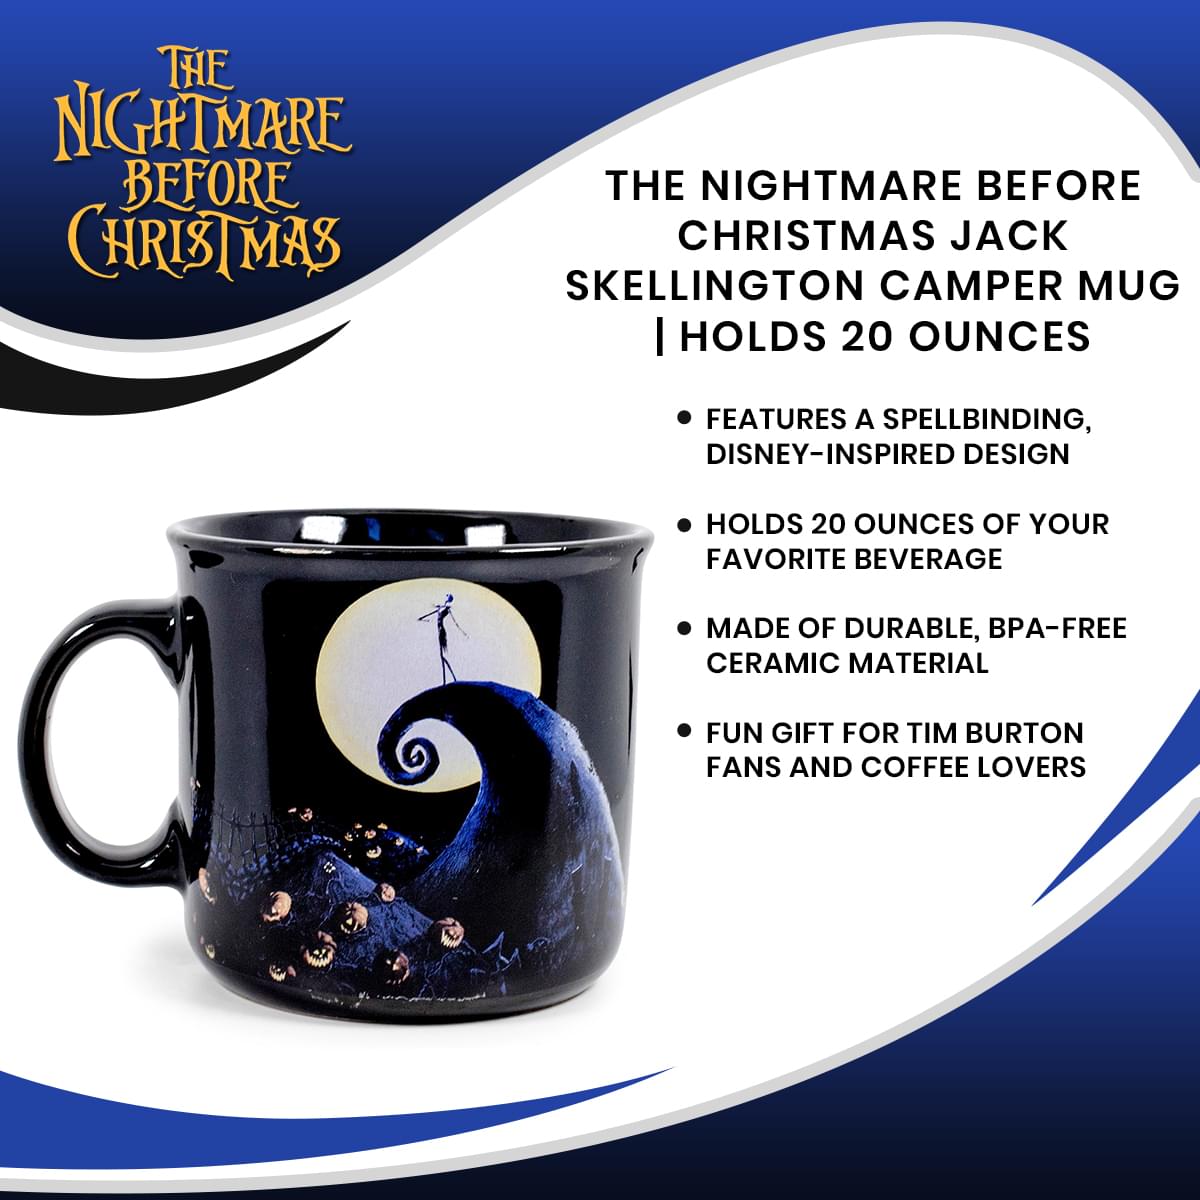 The Nightmare Before Christmas Jack Skellington Camper Mug | Holds 20 Ounces